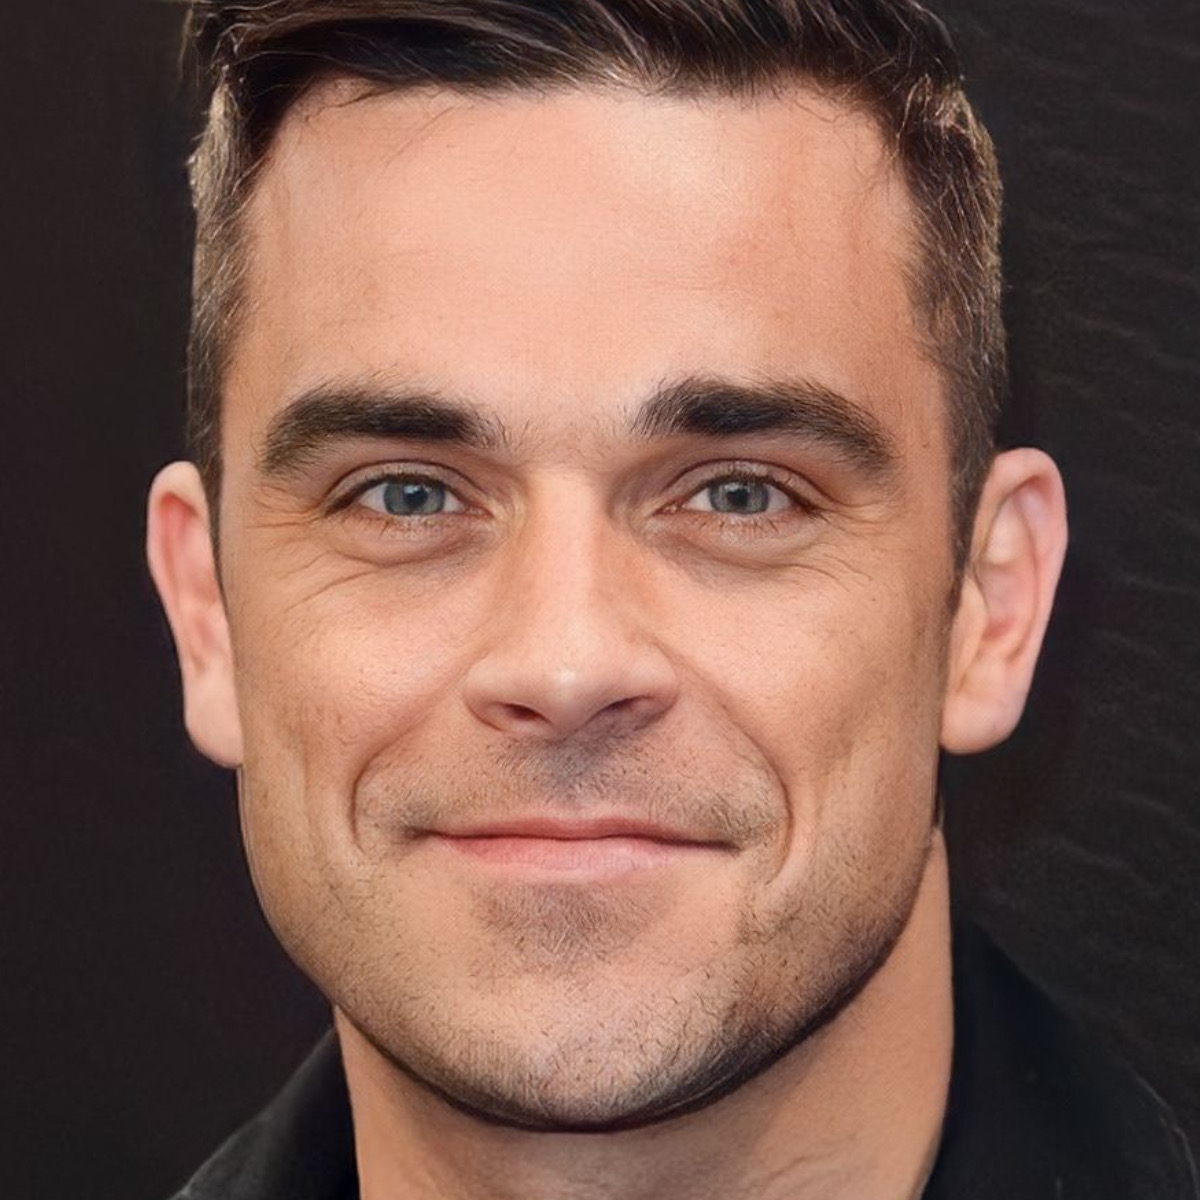 Robbie Williams these days